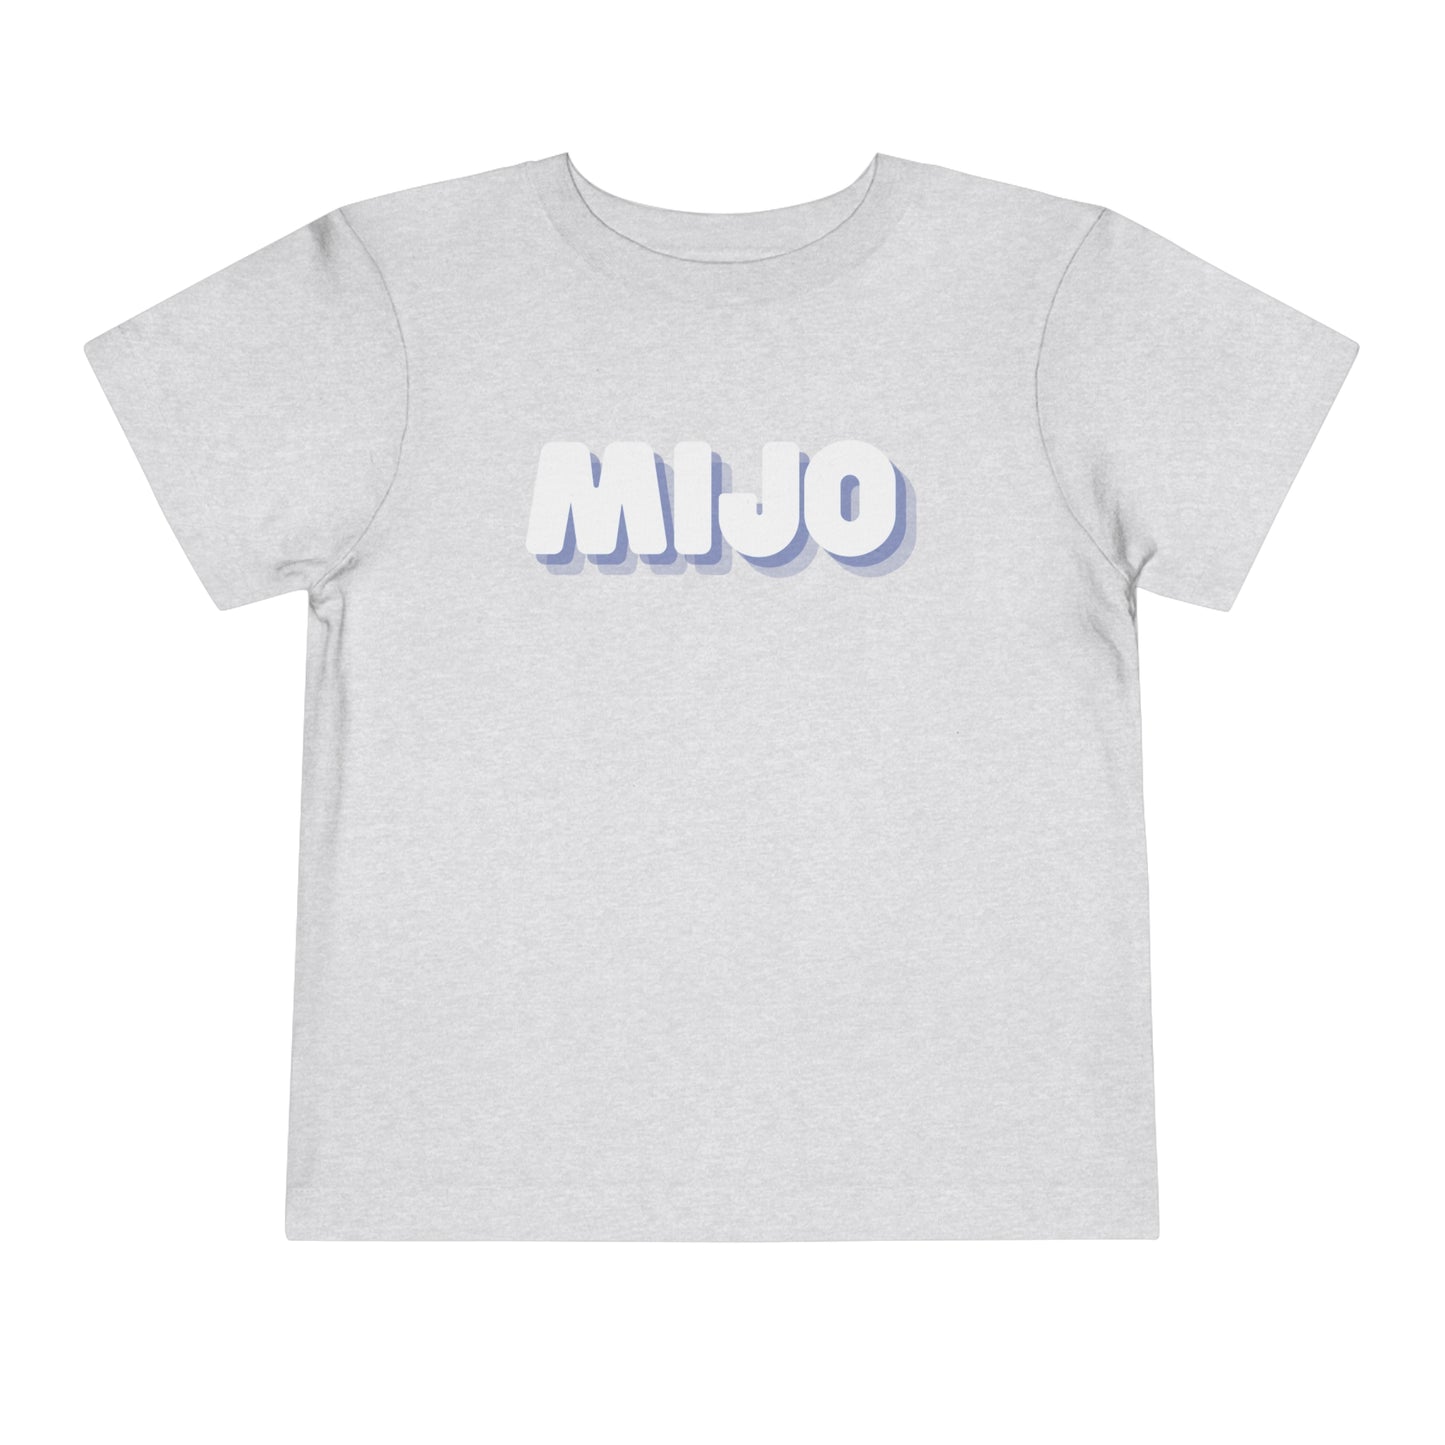 MIJO (son) Toddler Short Sleeve Tee